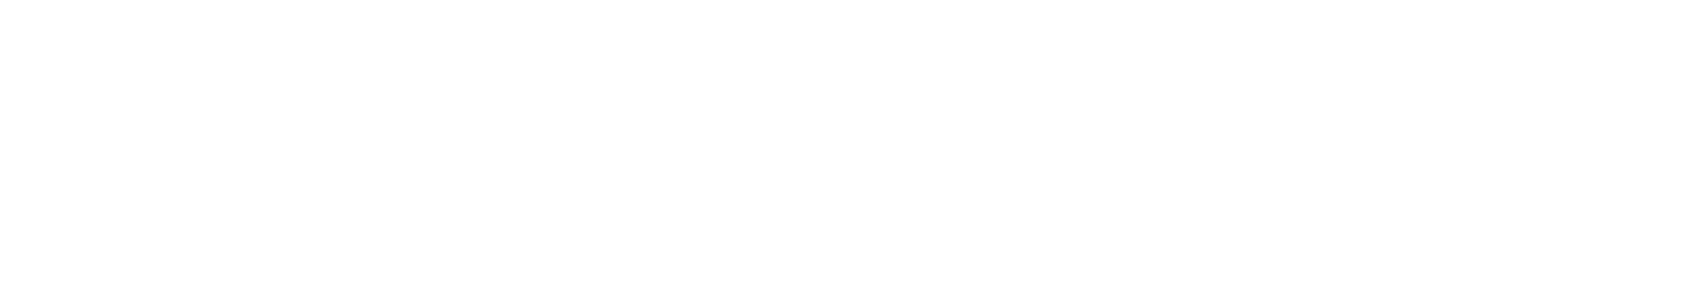 DynaRisk logo